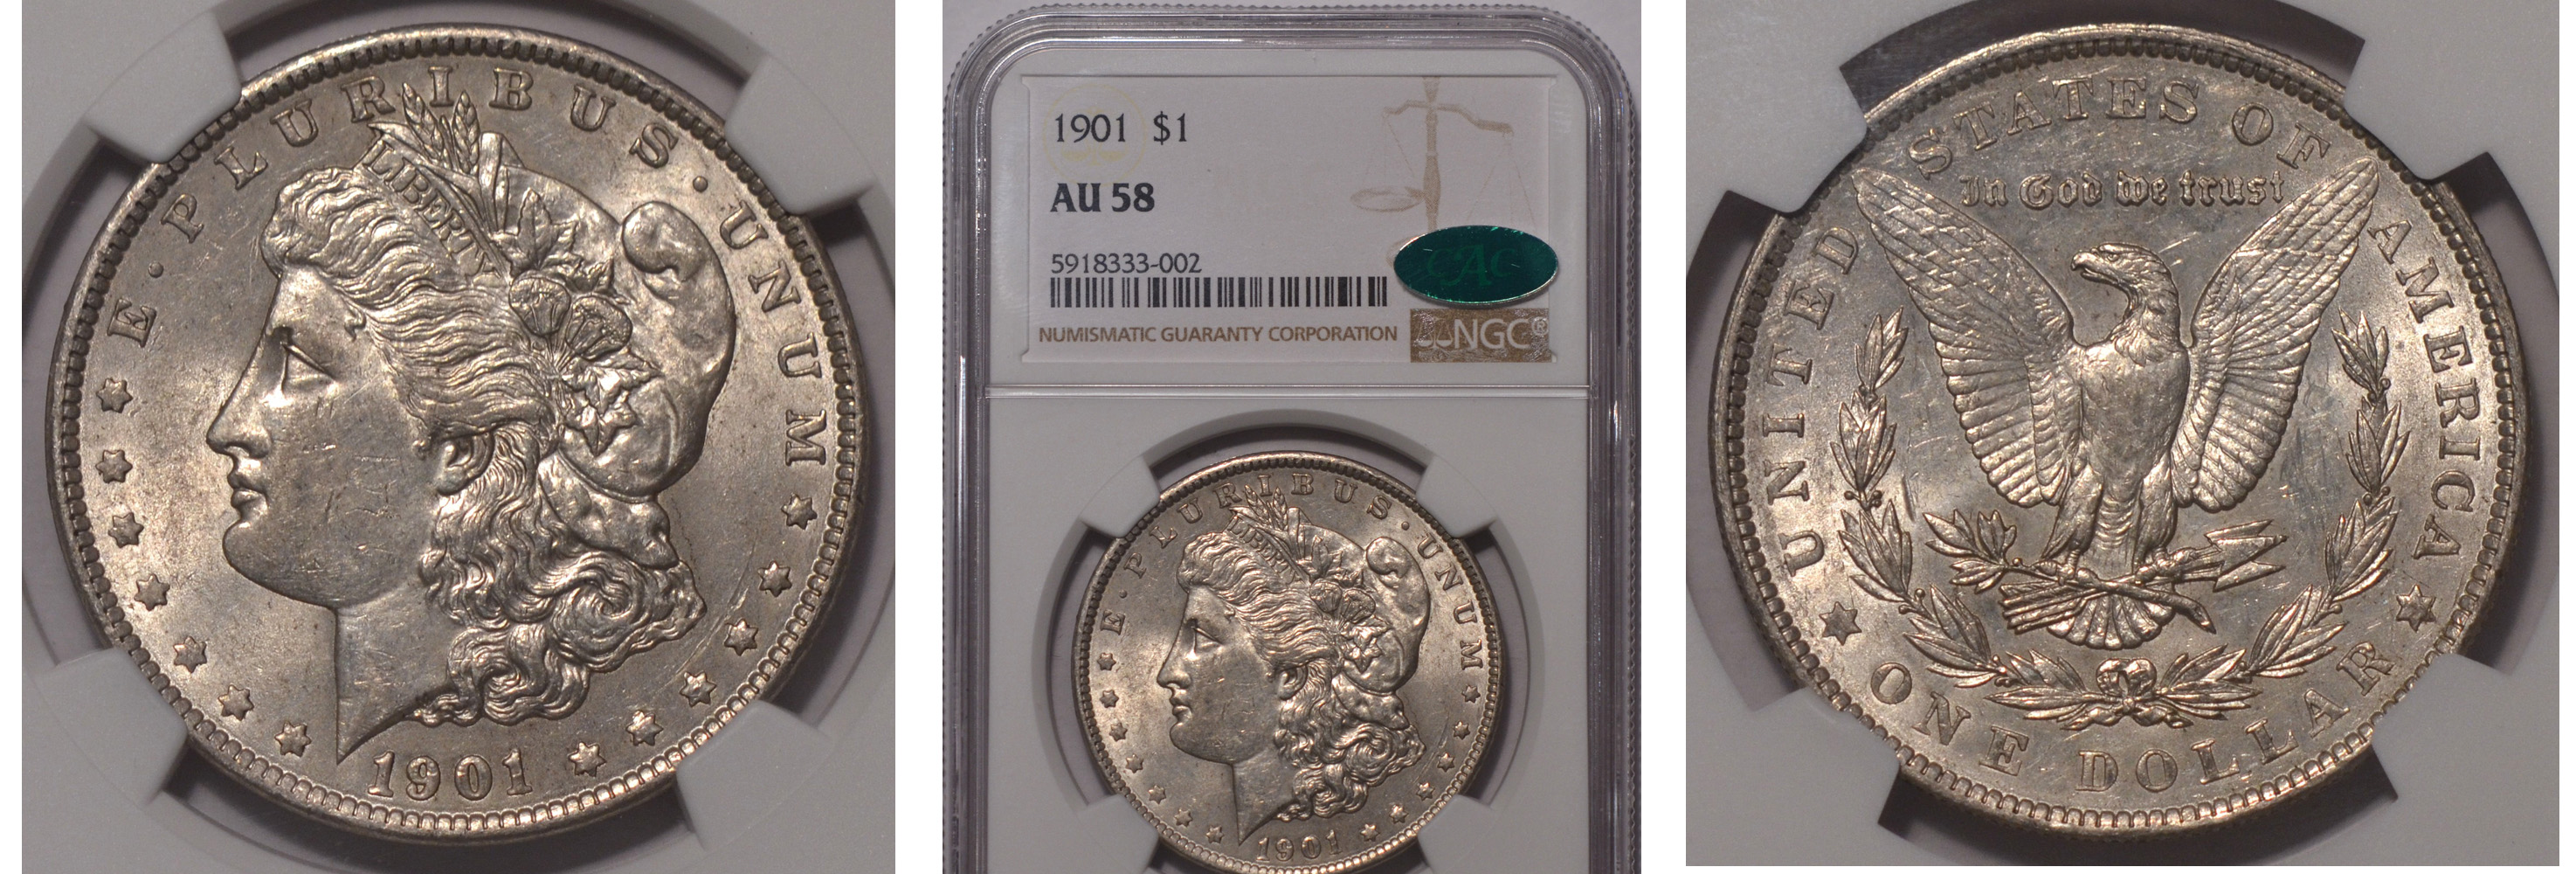 1901 Morgan Silver Dollar $1 NGC AU58 CAC